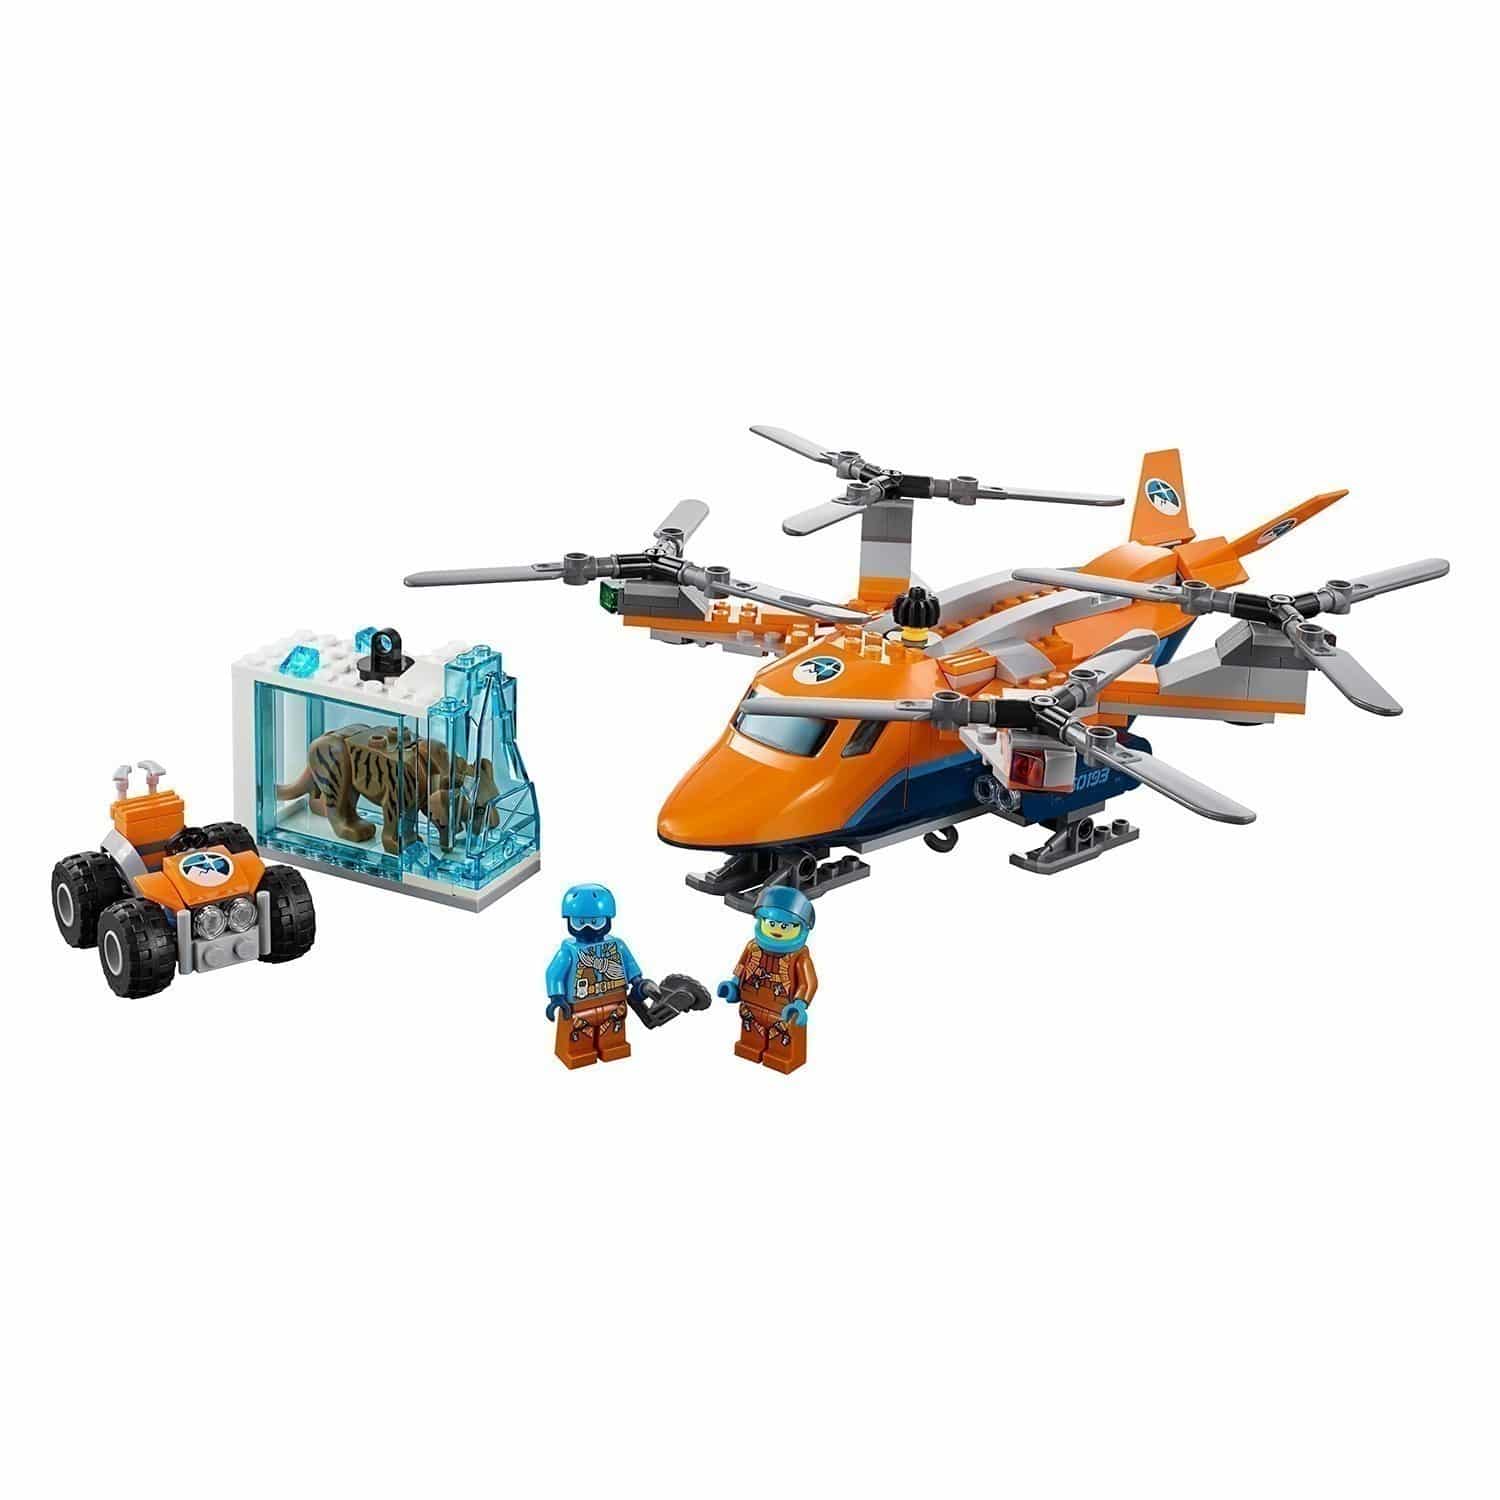 LEGO® City 60193 - Arctic Air Transport